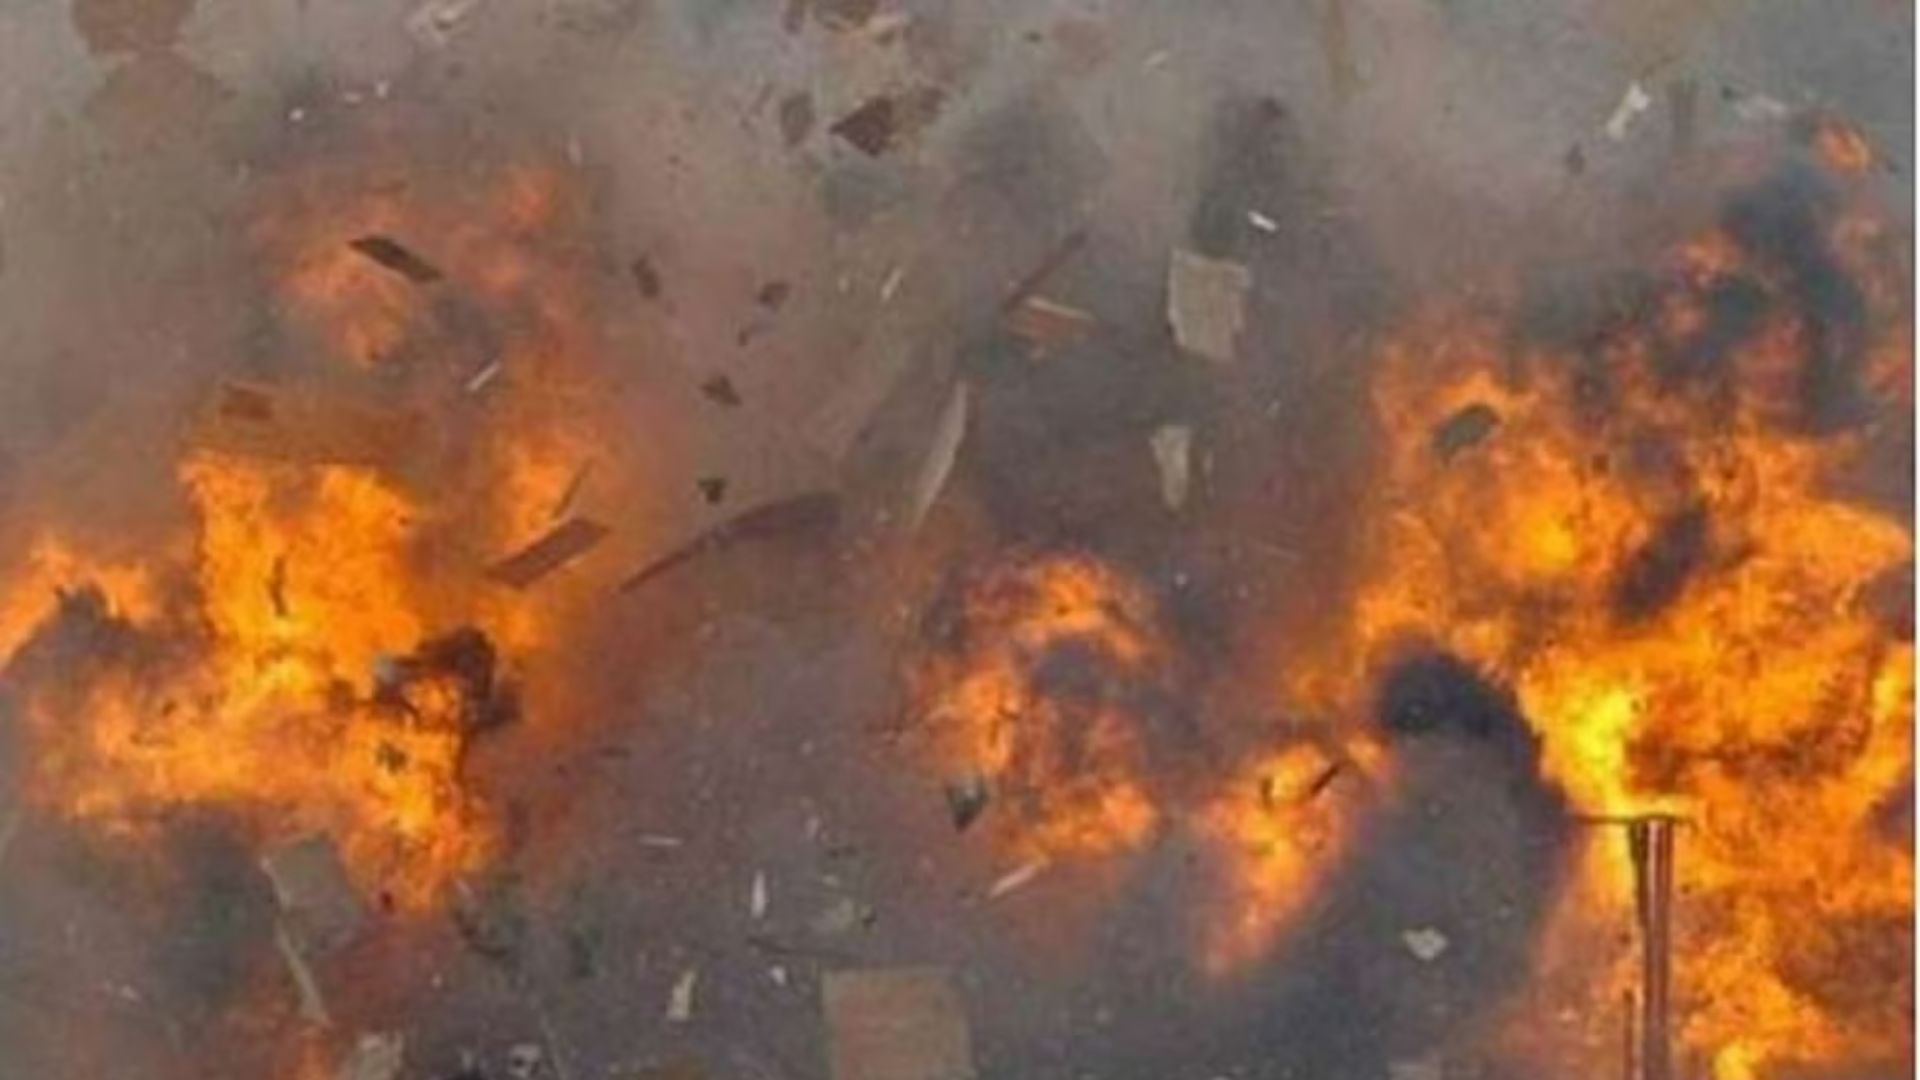 Explosion at Uttar Pradesh Festival Kills Four Children, Injures Others